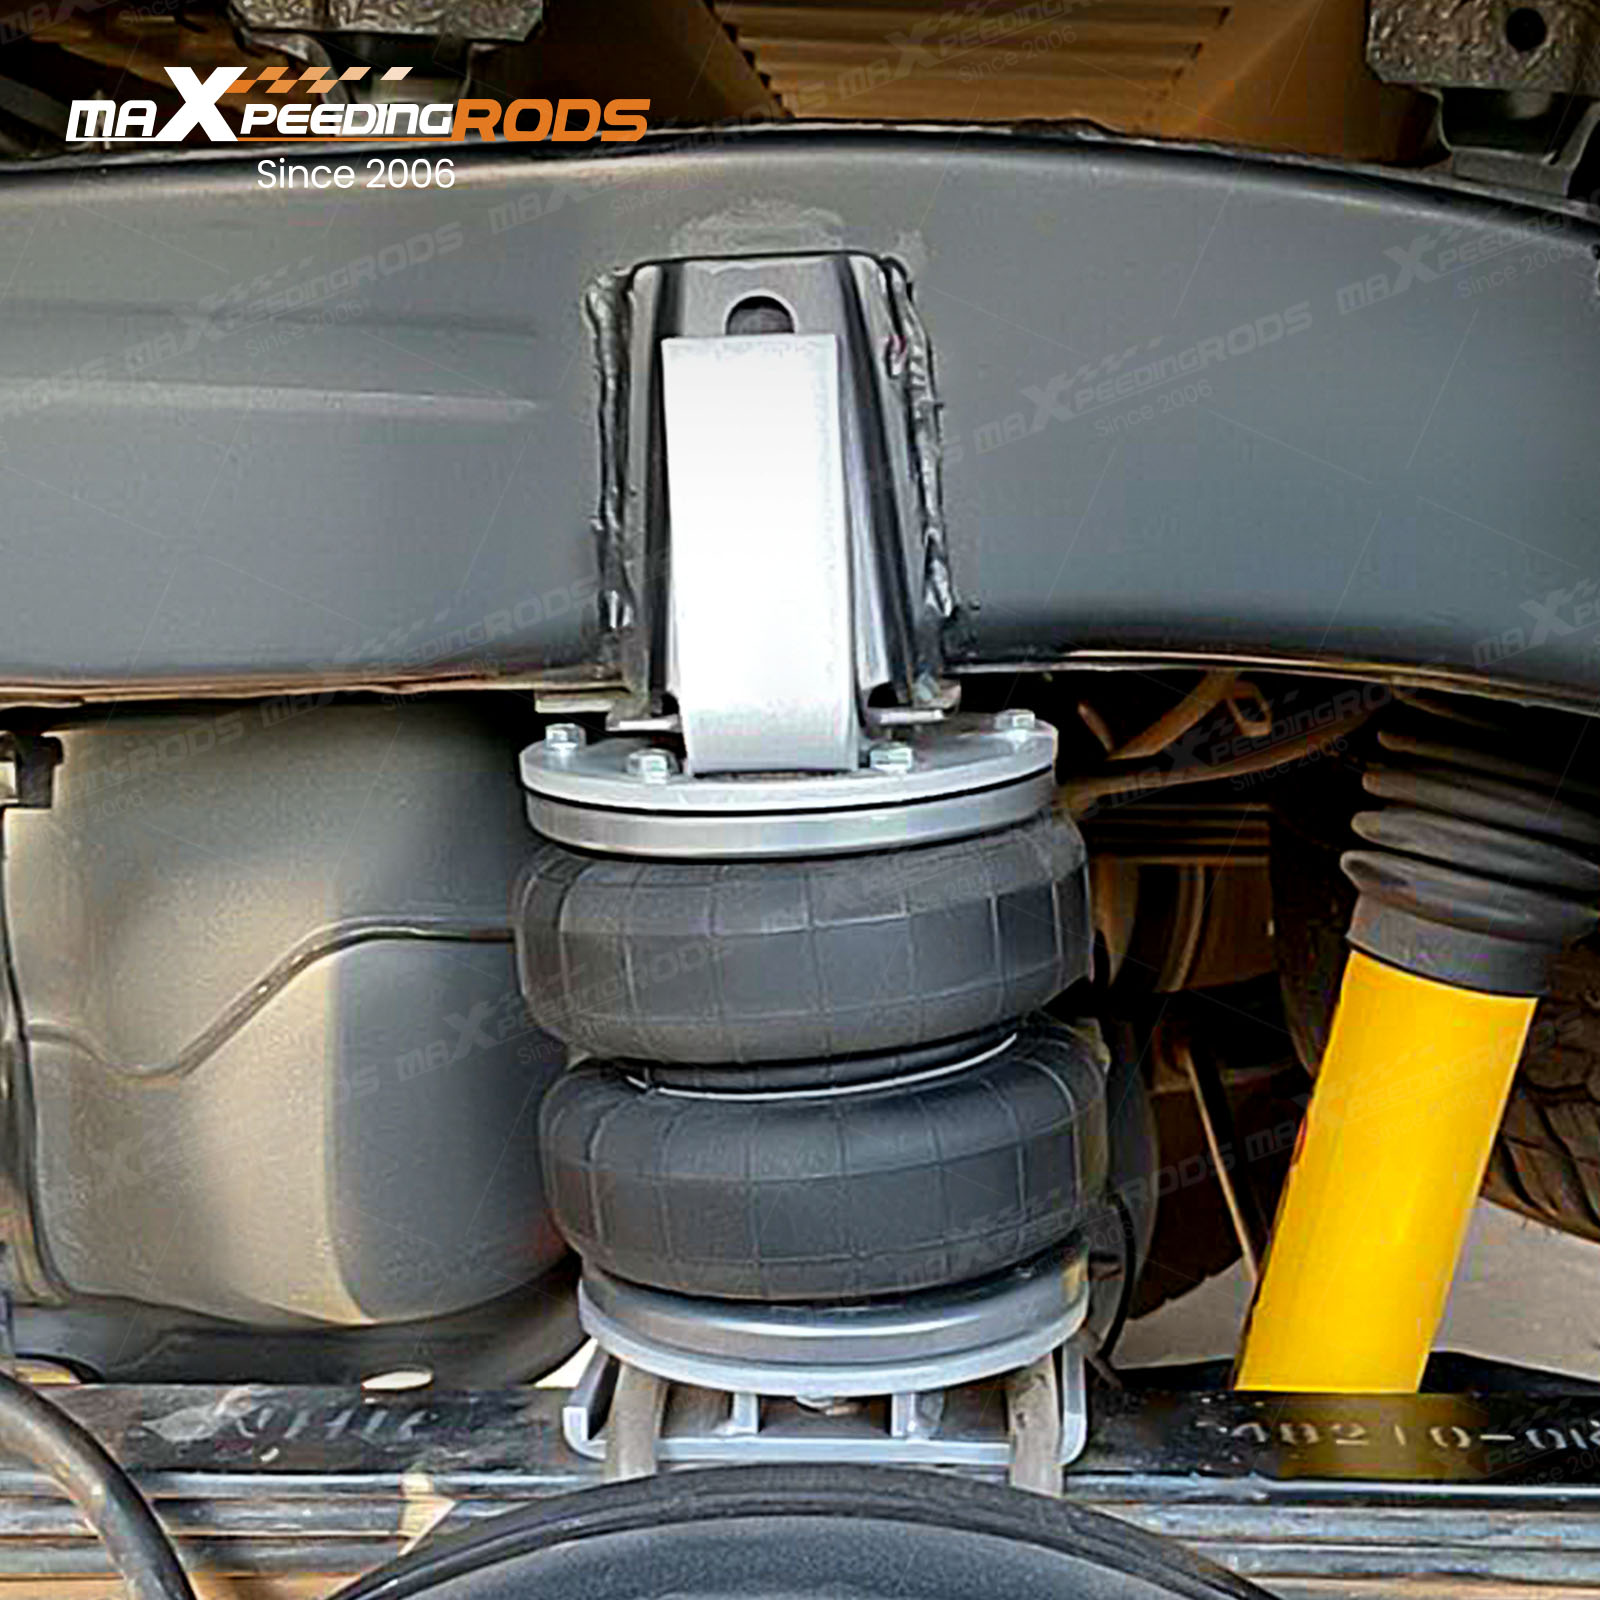 MaXpeedingrods Air suspension kit